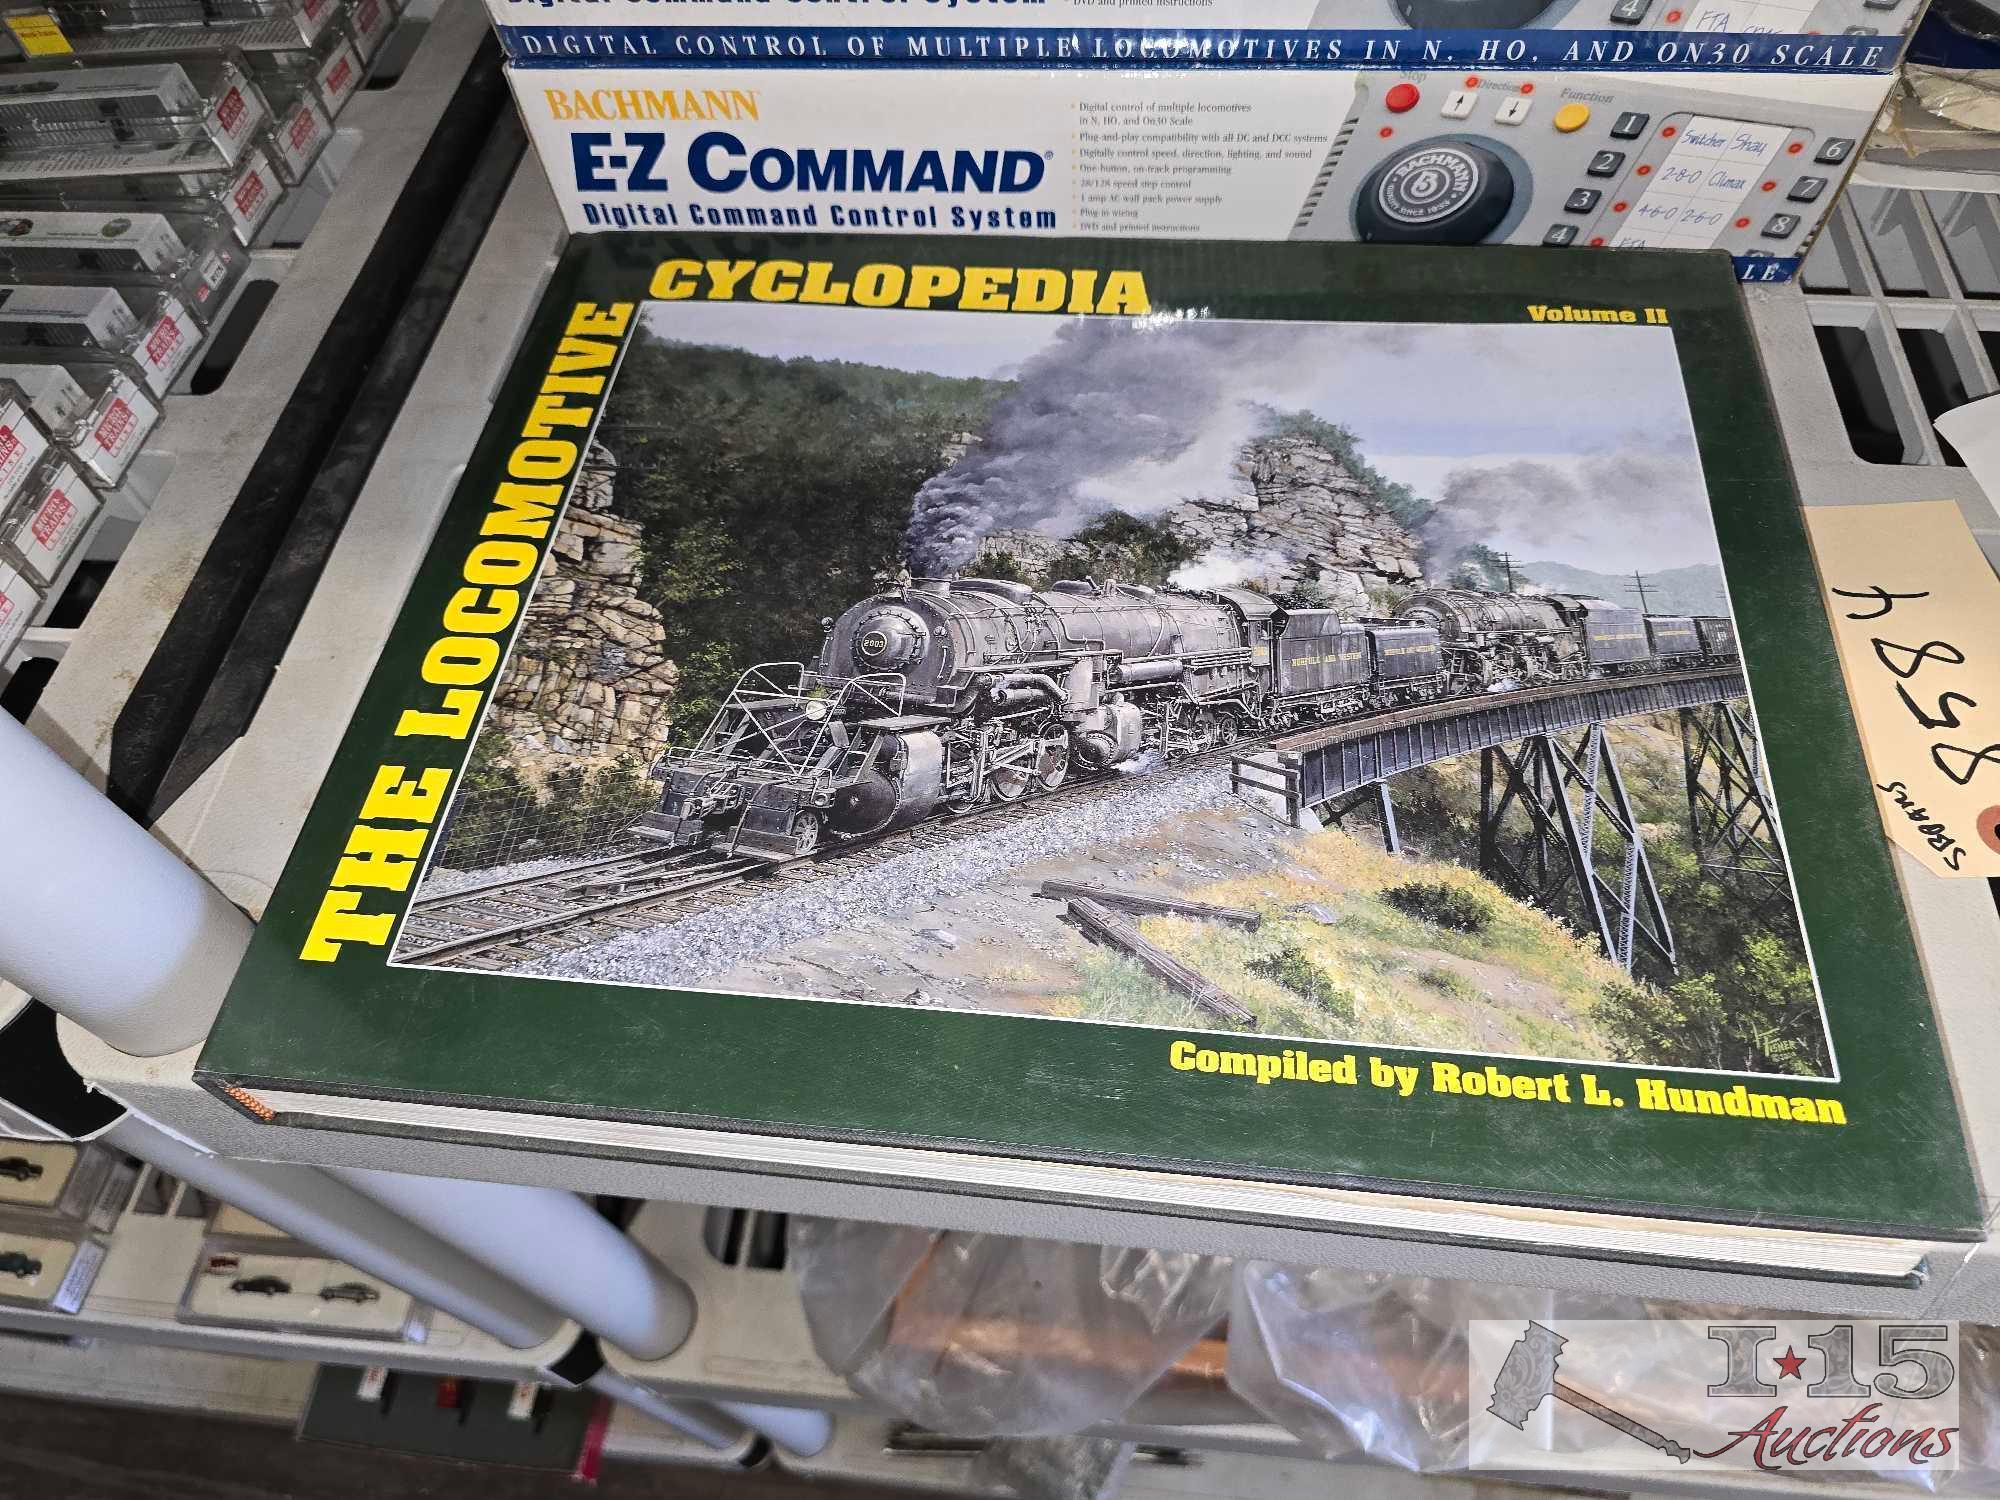 (2) E-Z Commands, (2) Woodland Scenic Manuals, (2) Locomotive Cyclopedias